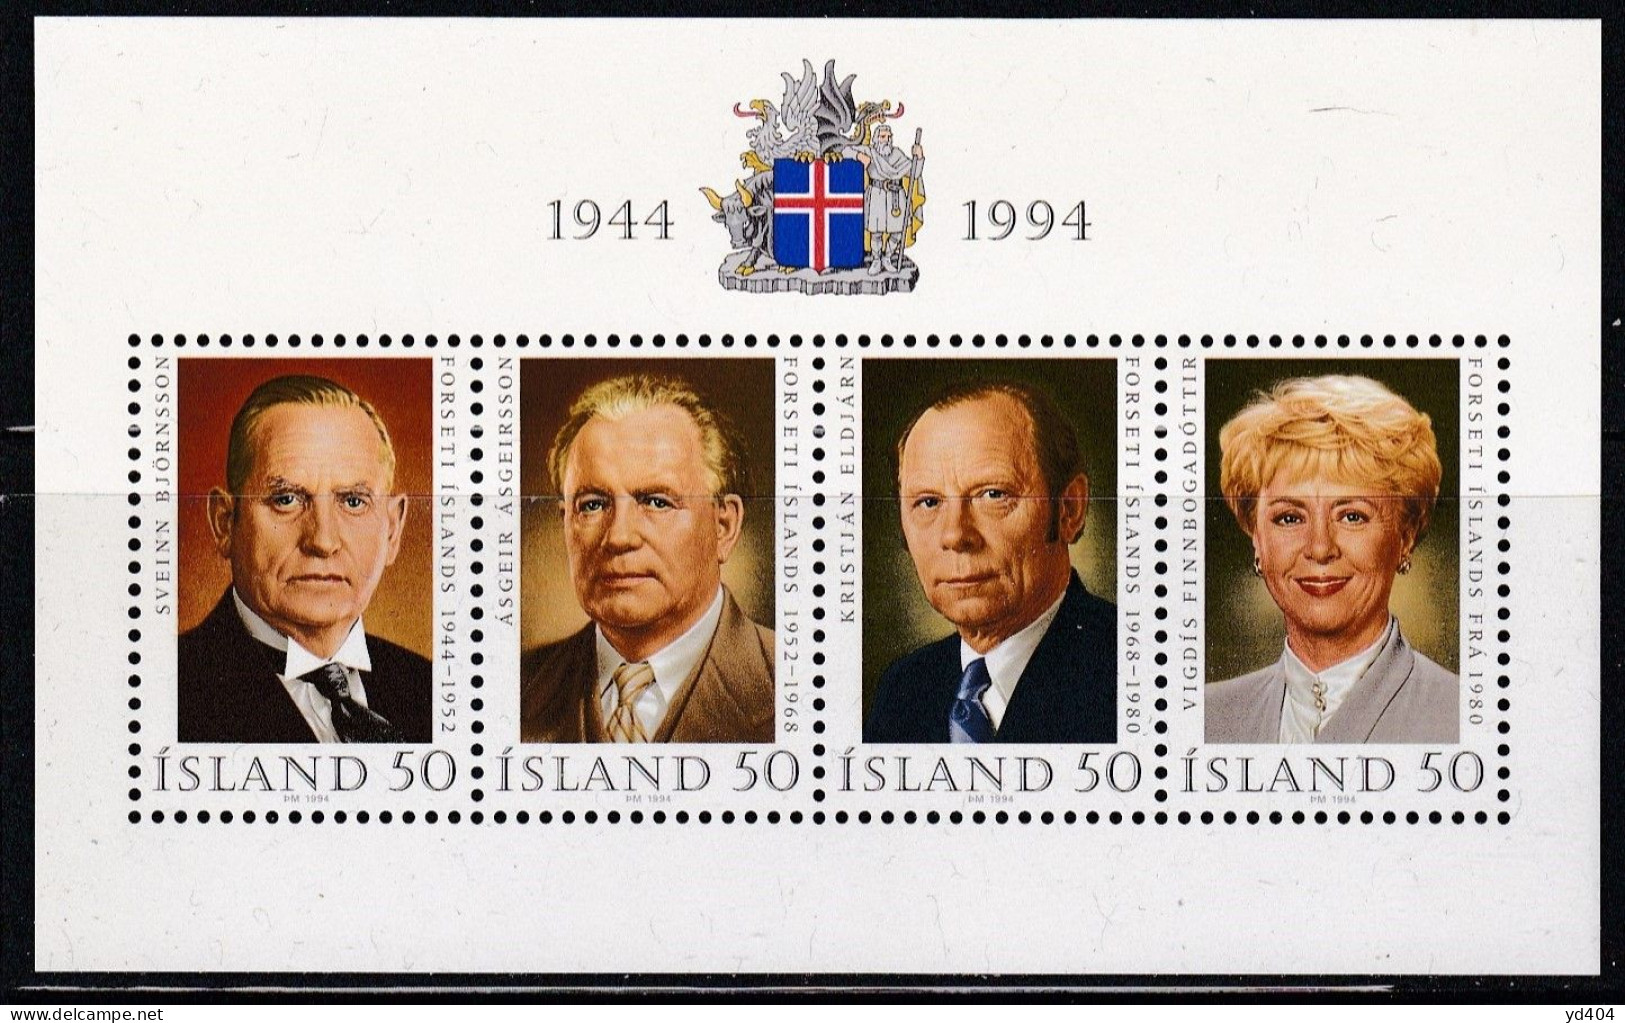 IS484 – ISLANDE – ICELAND – 1994 – 50th ANNIVERSARY OF REPUBLIC – SG # MS 829 MNH 11,50 € - Blokken & Velletjes